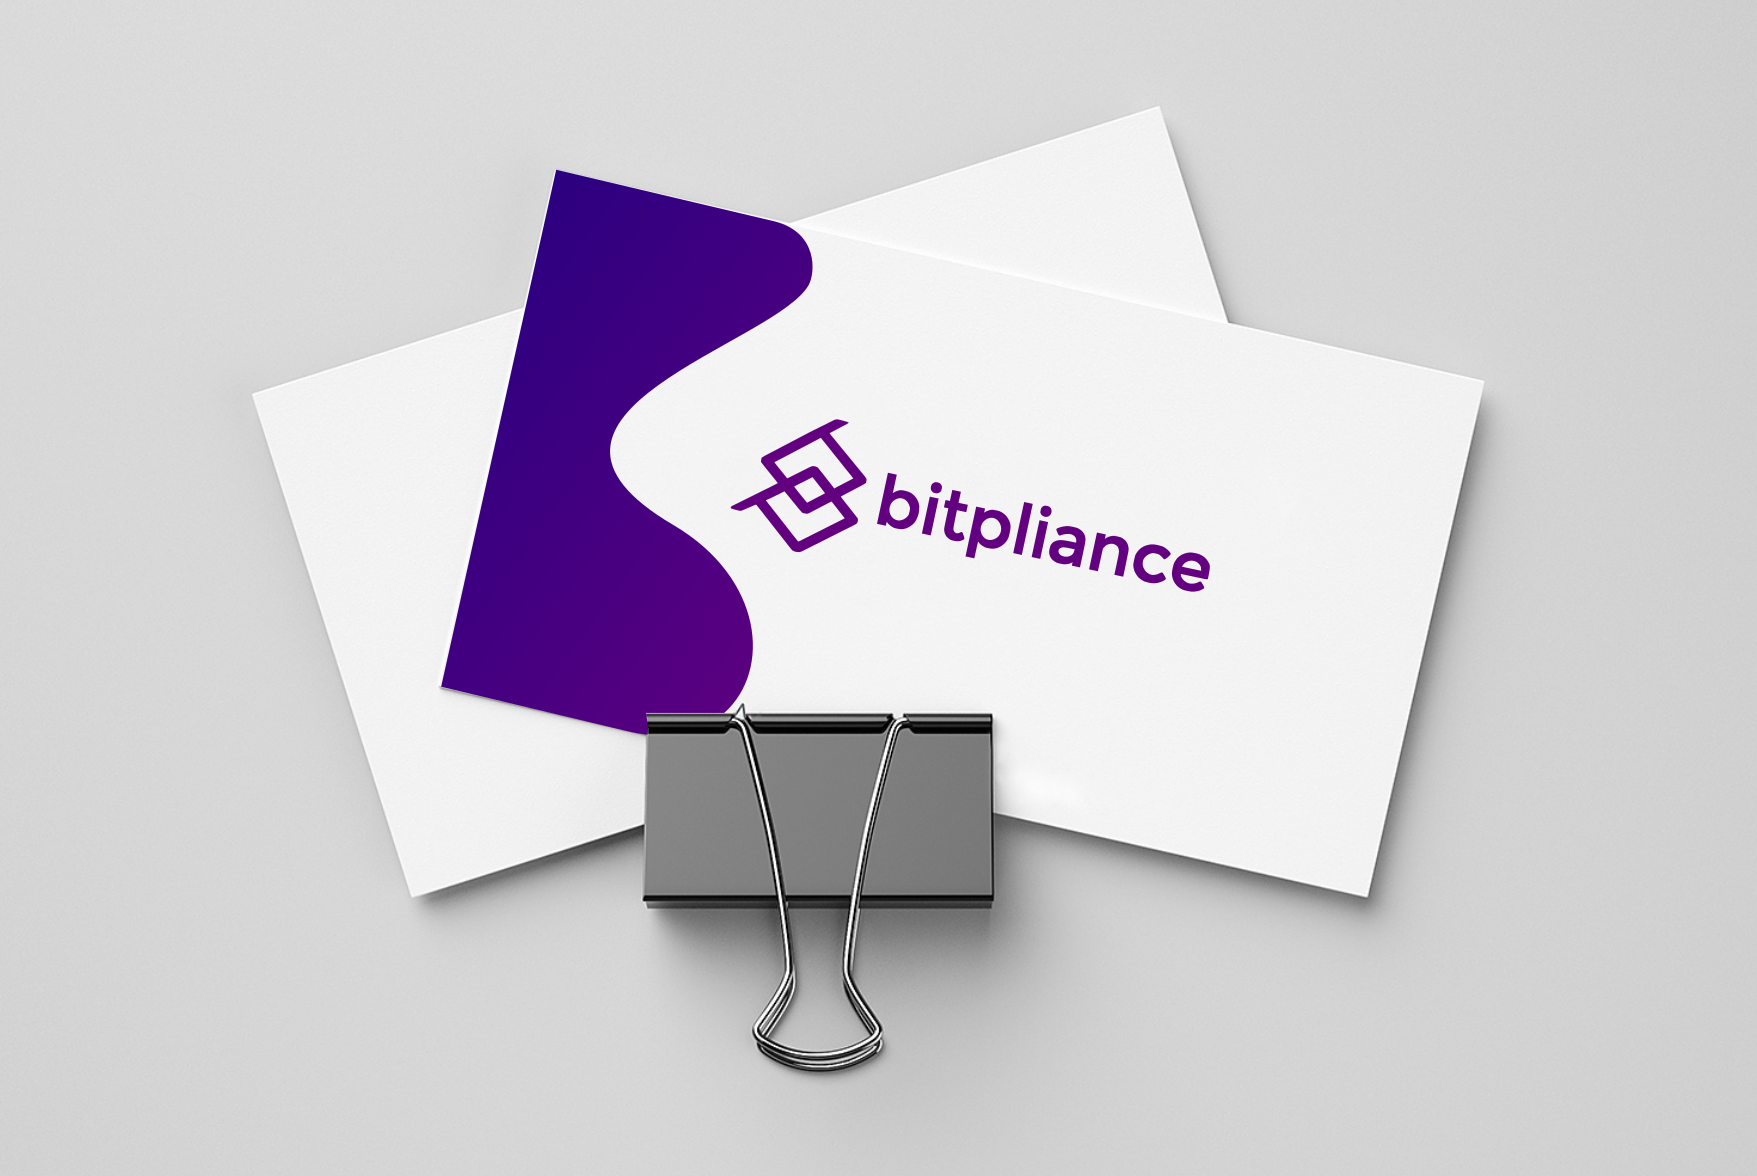 The Bitpliance logo printed on a business card